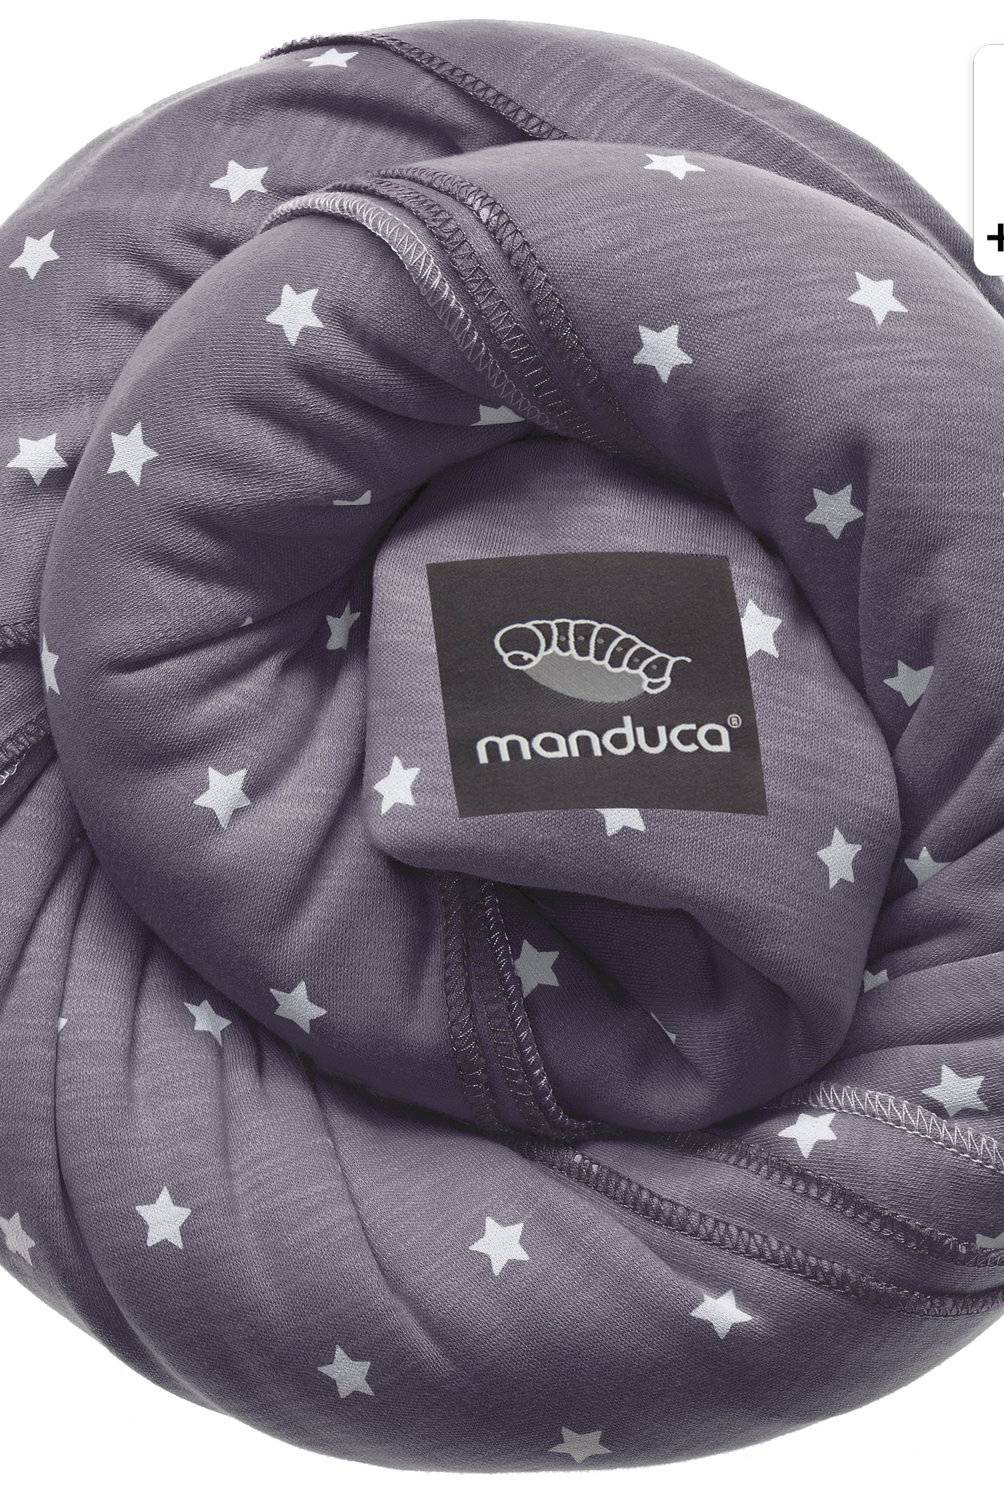 MANDUCA - Fular Portabebé Sling Estrellas Gris